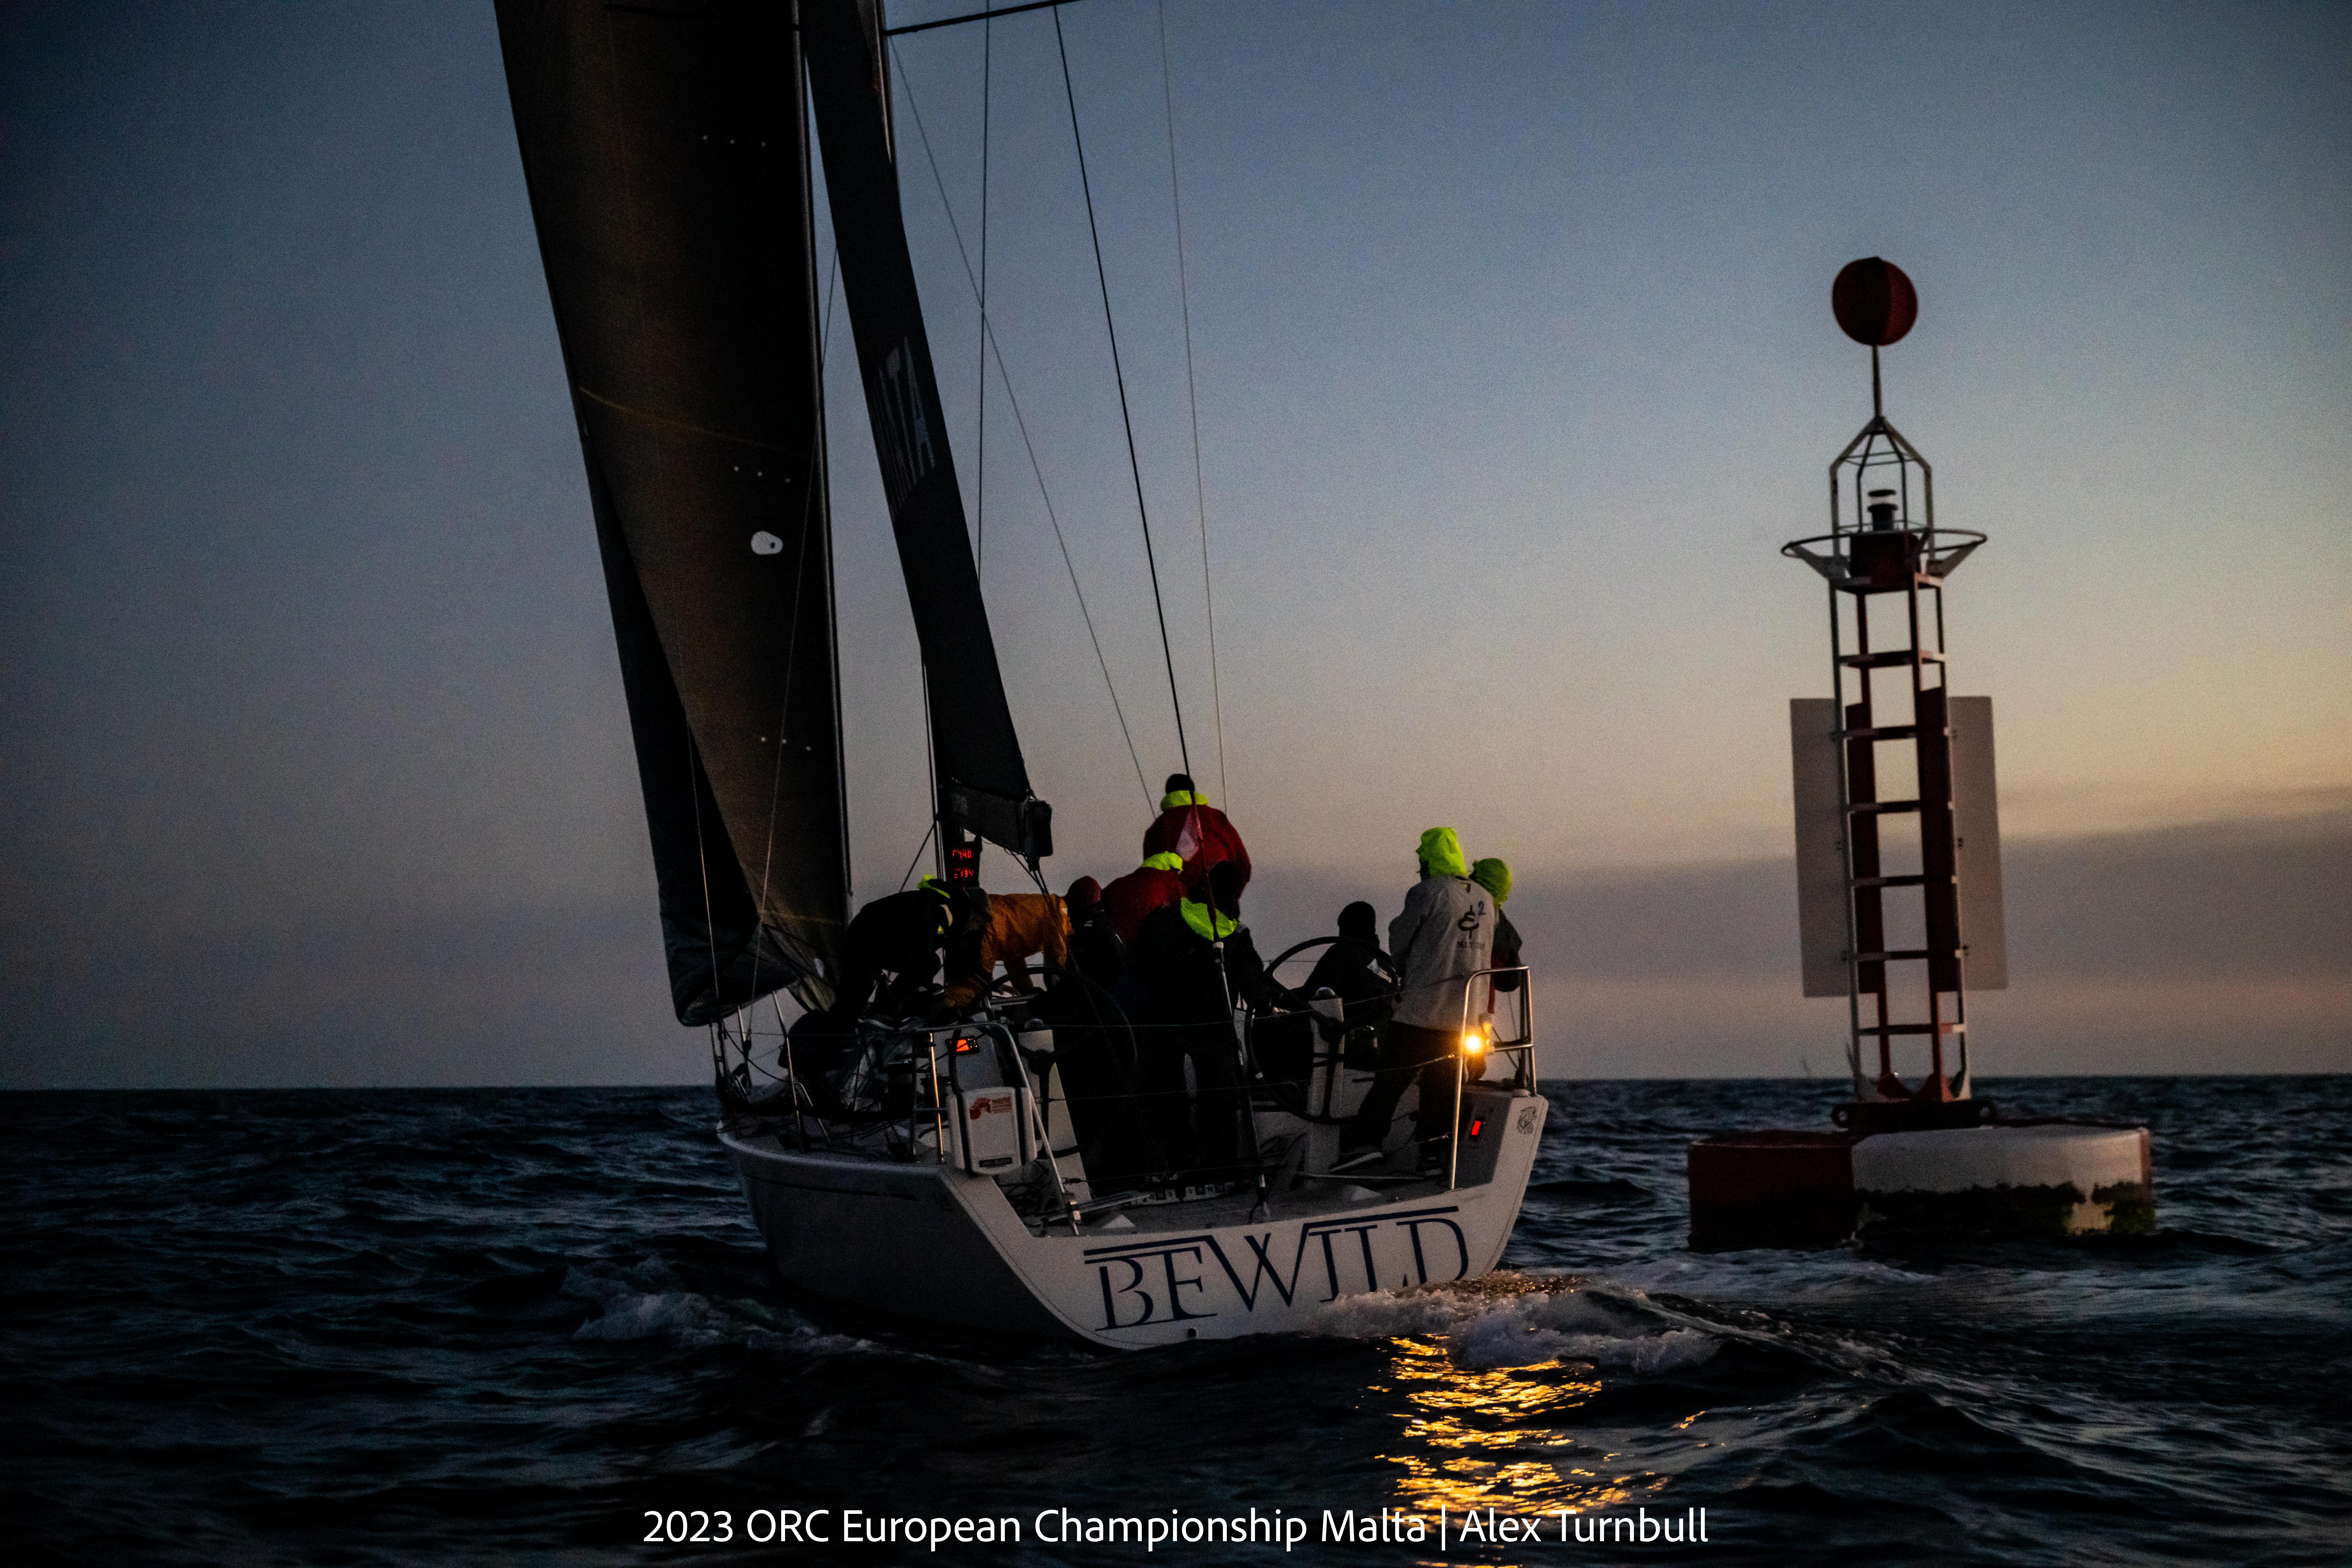 Renzo Grottesi’s (ITA) Club Swan 42 BE WILD - 2023 ORC European Championship Malta © Alex Turnbull